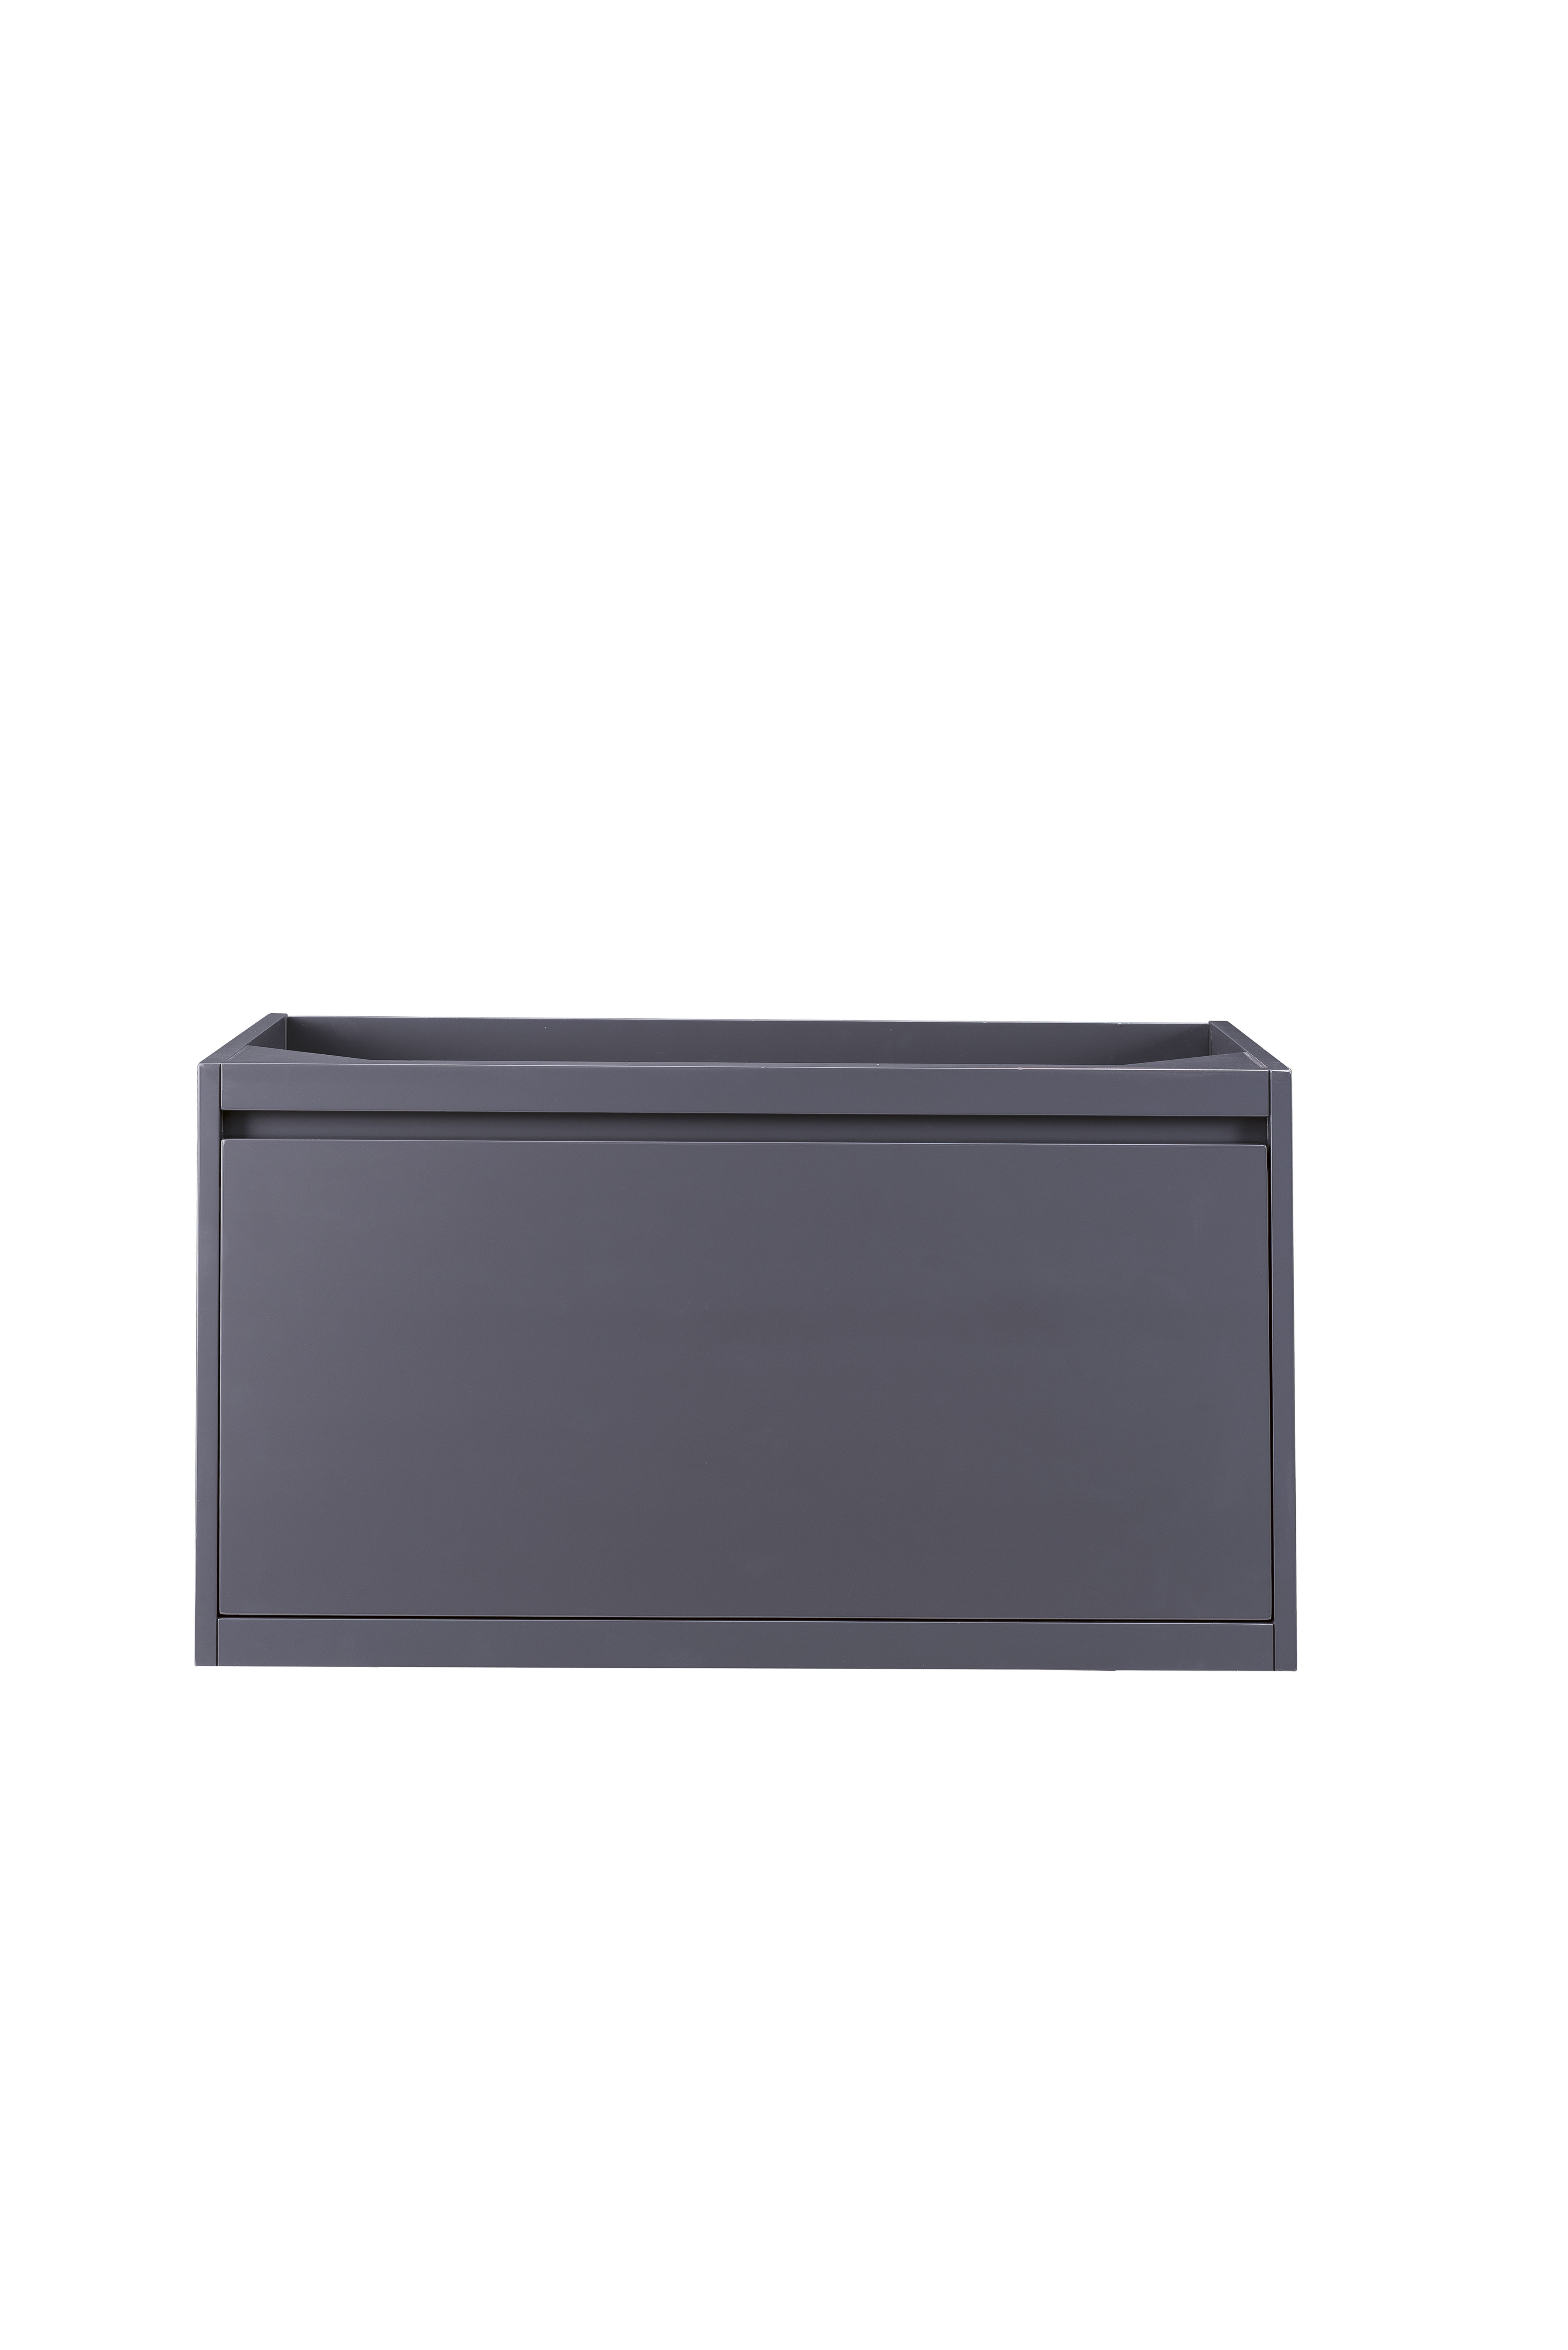 James Martin 801-V35.4-MGG Milan 35.4" Single Vanity Cabinet, Modern Grey Glossy